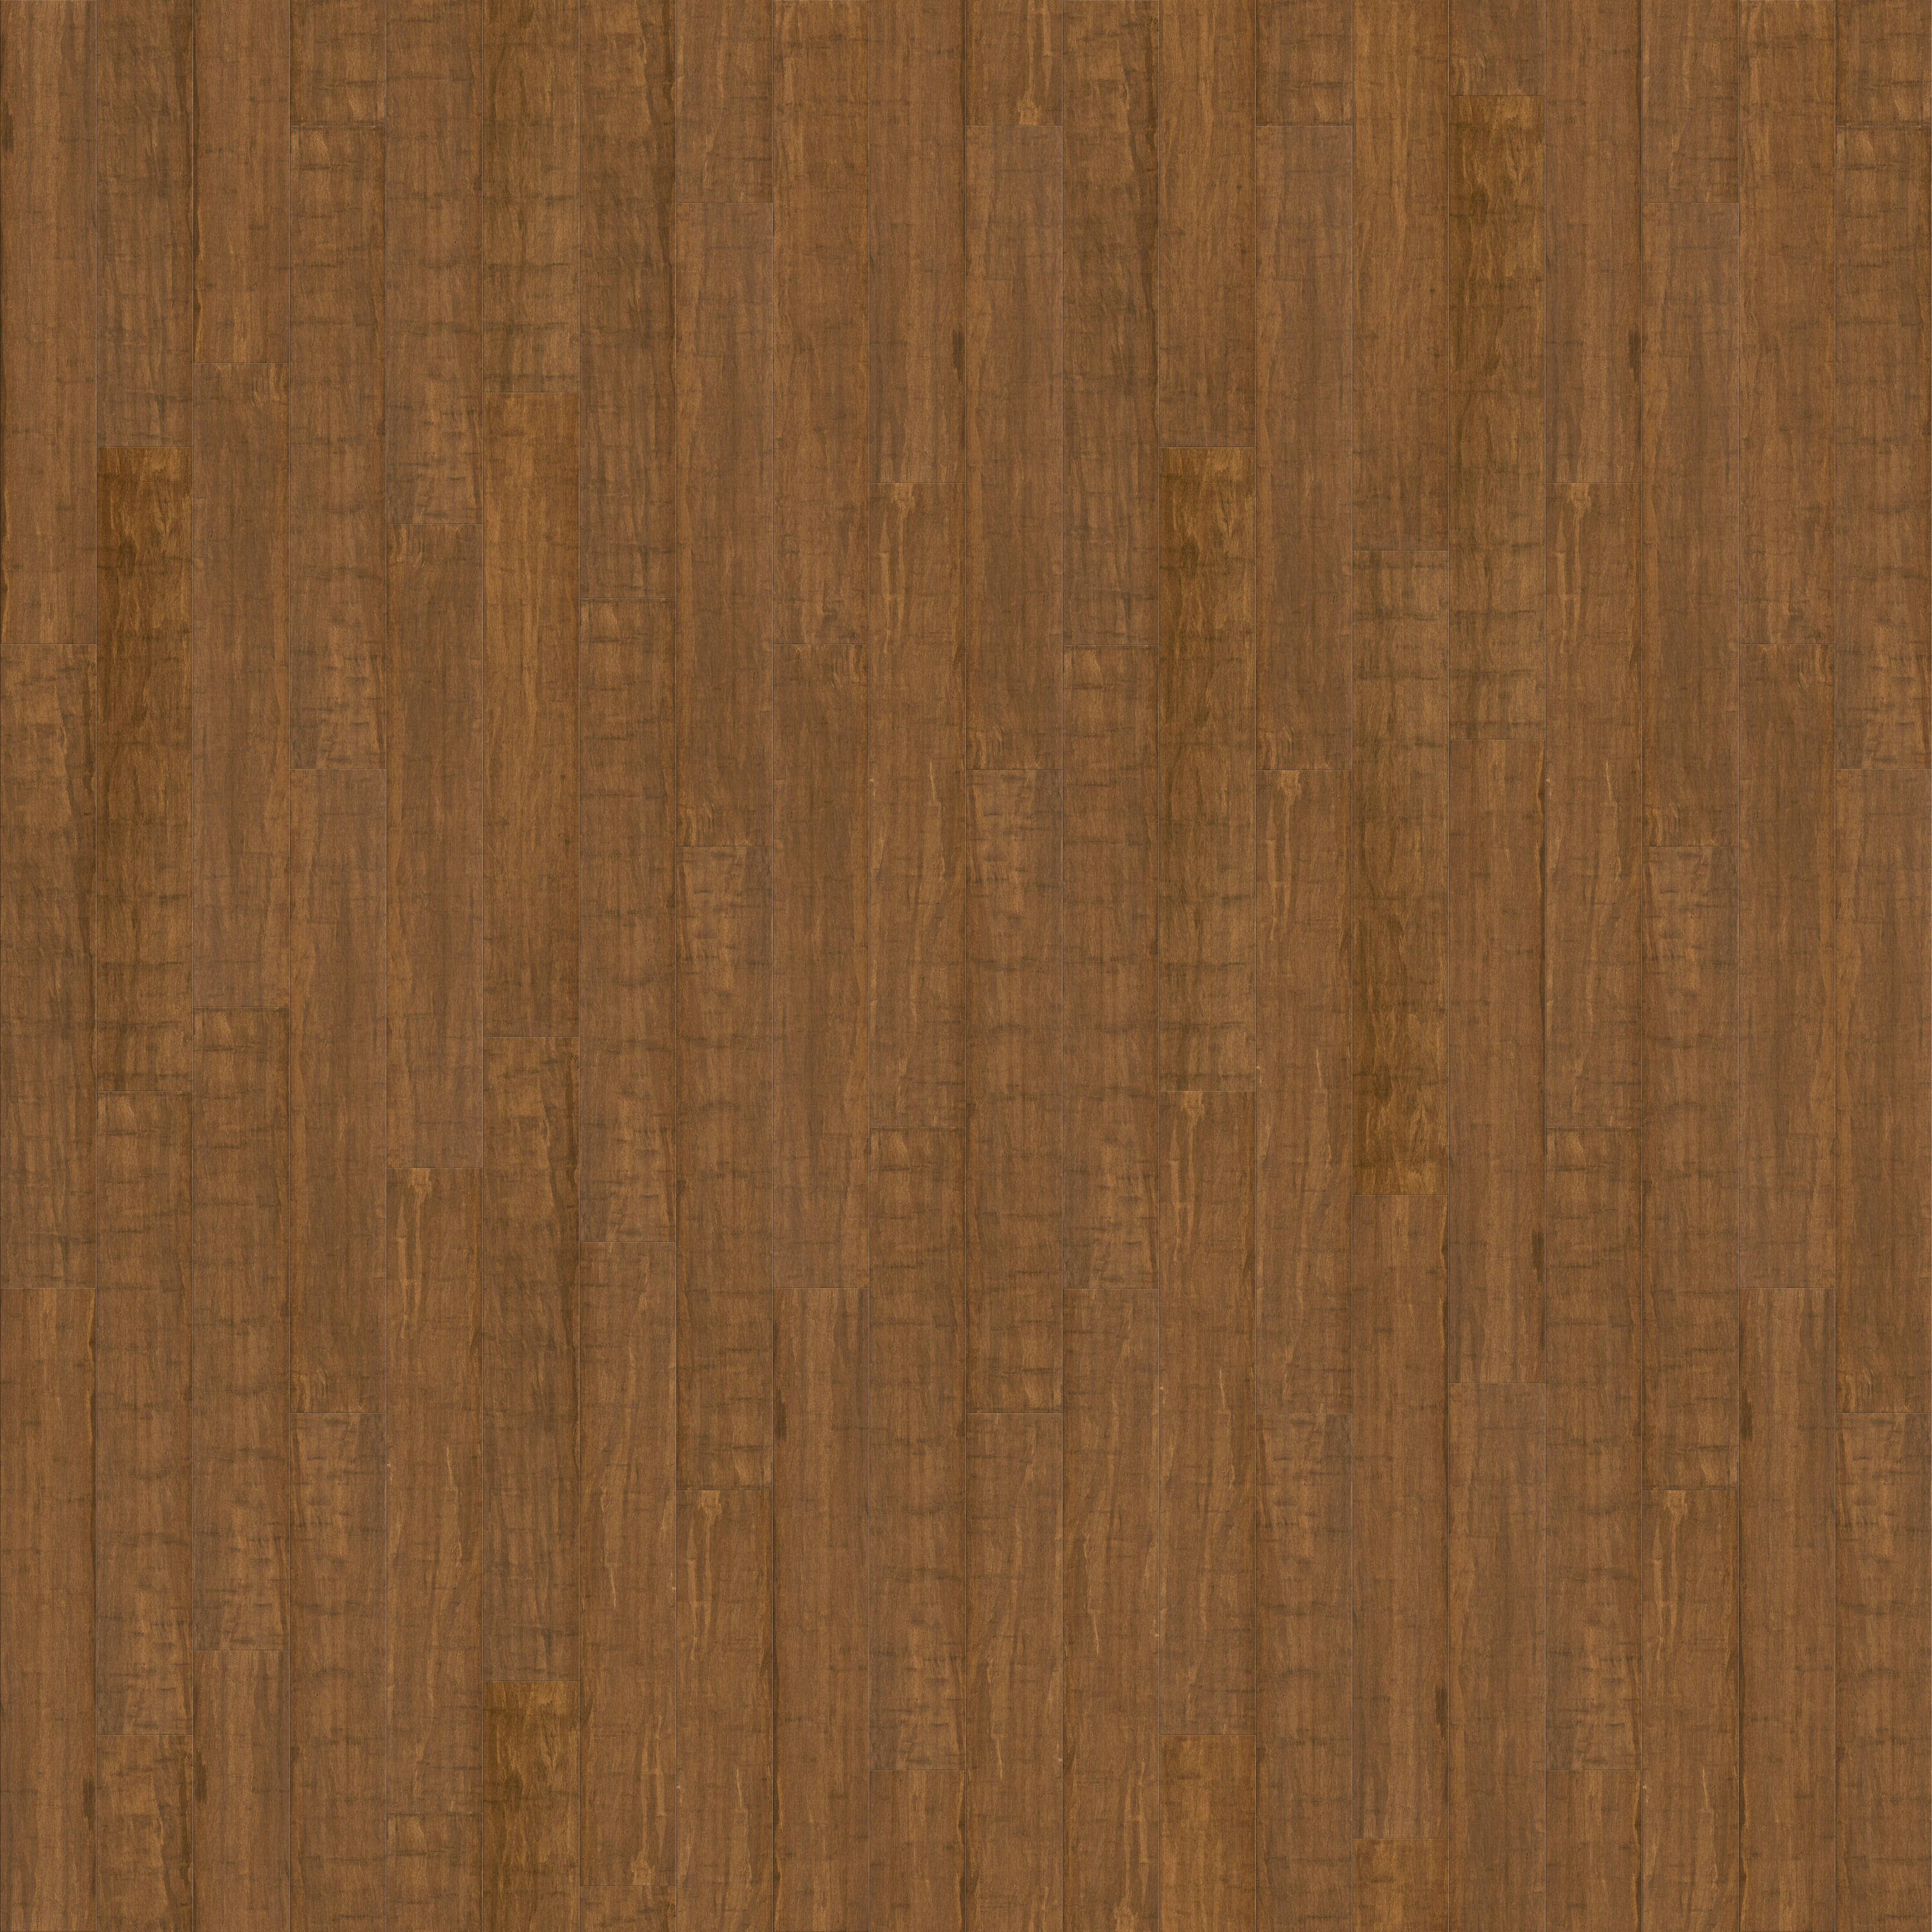 (Sample) Fossilized Java Bamboo Locking Hardwood Flooring in Brown | - Cali Bamboo 7004001907